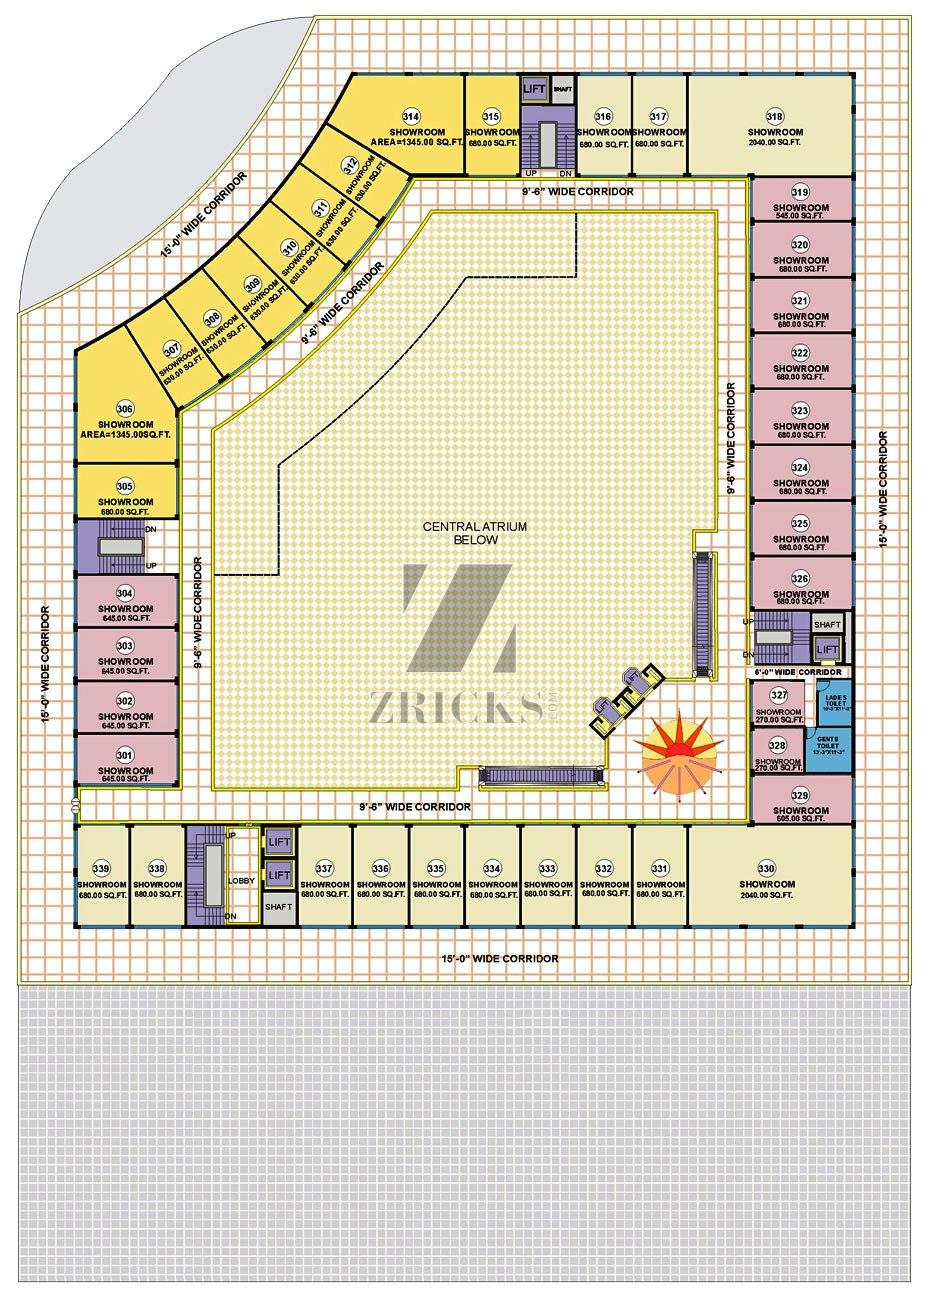 Parsvnath Mall Floor Plan